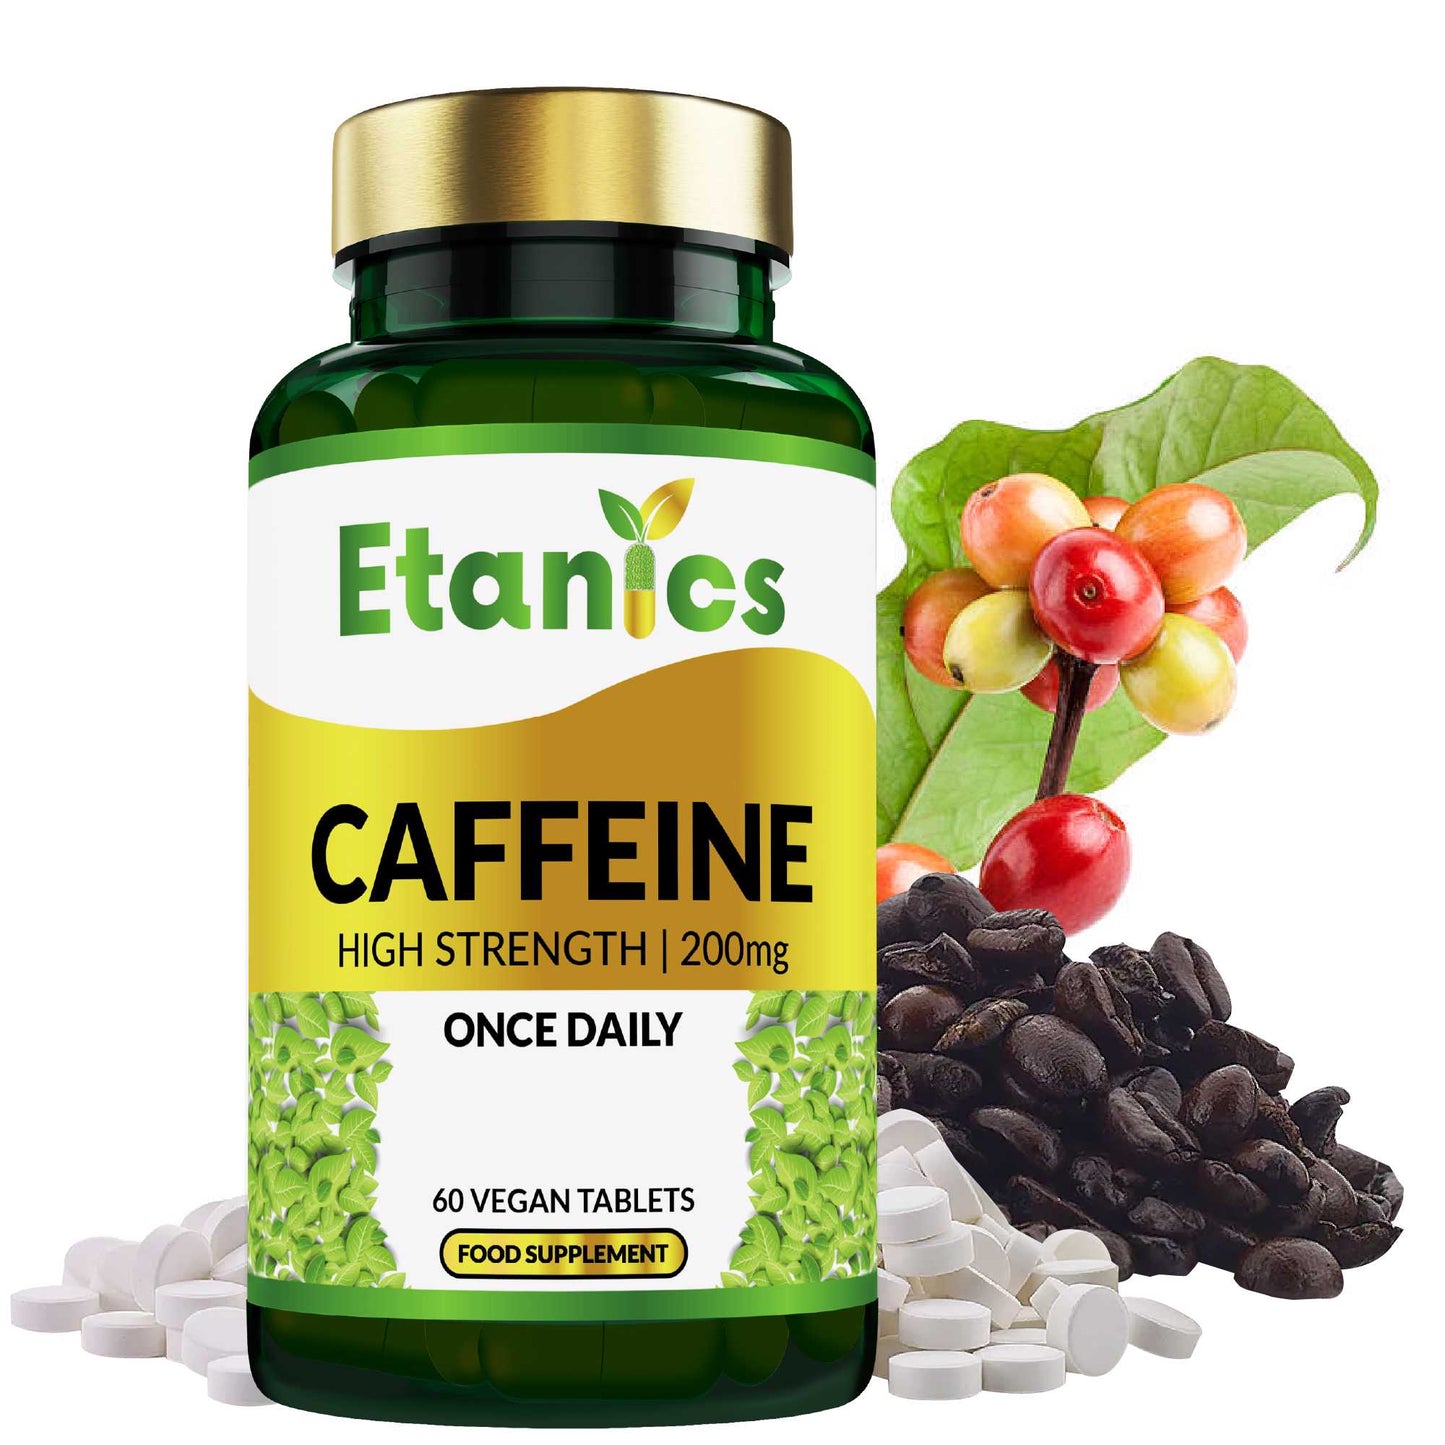 Etanics Caffeine Vegan Supplement Front with Ingredients